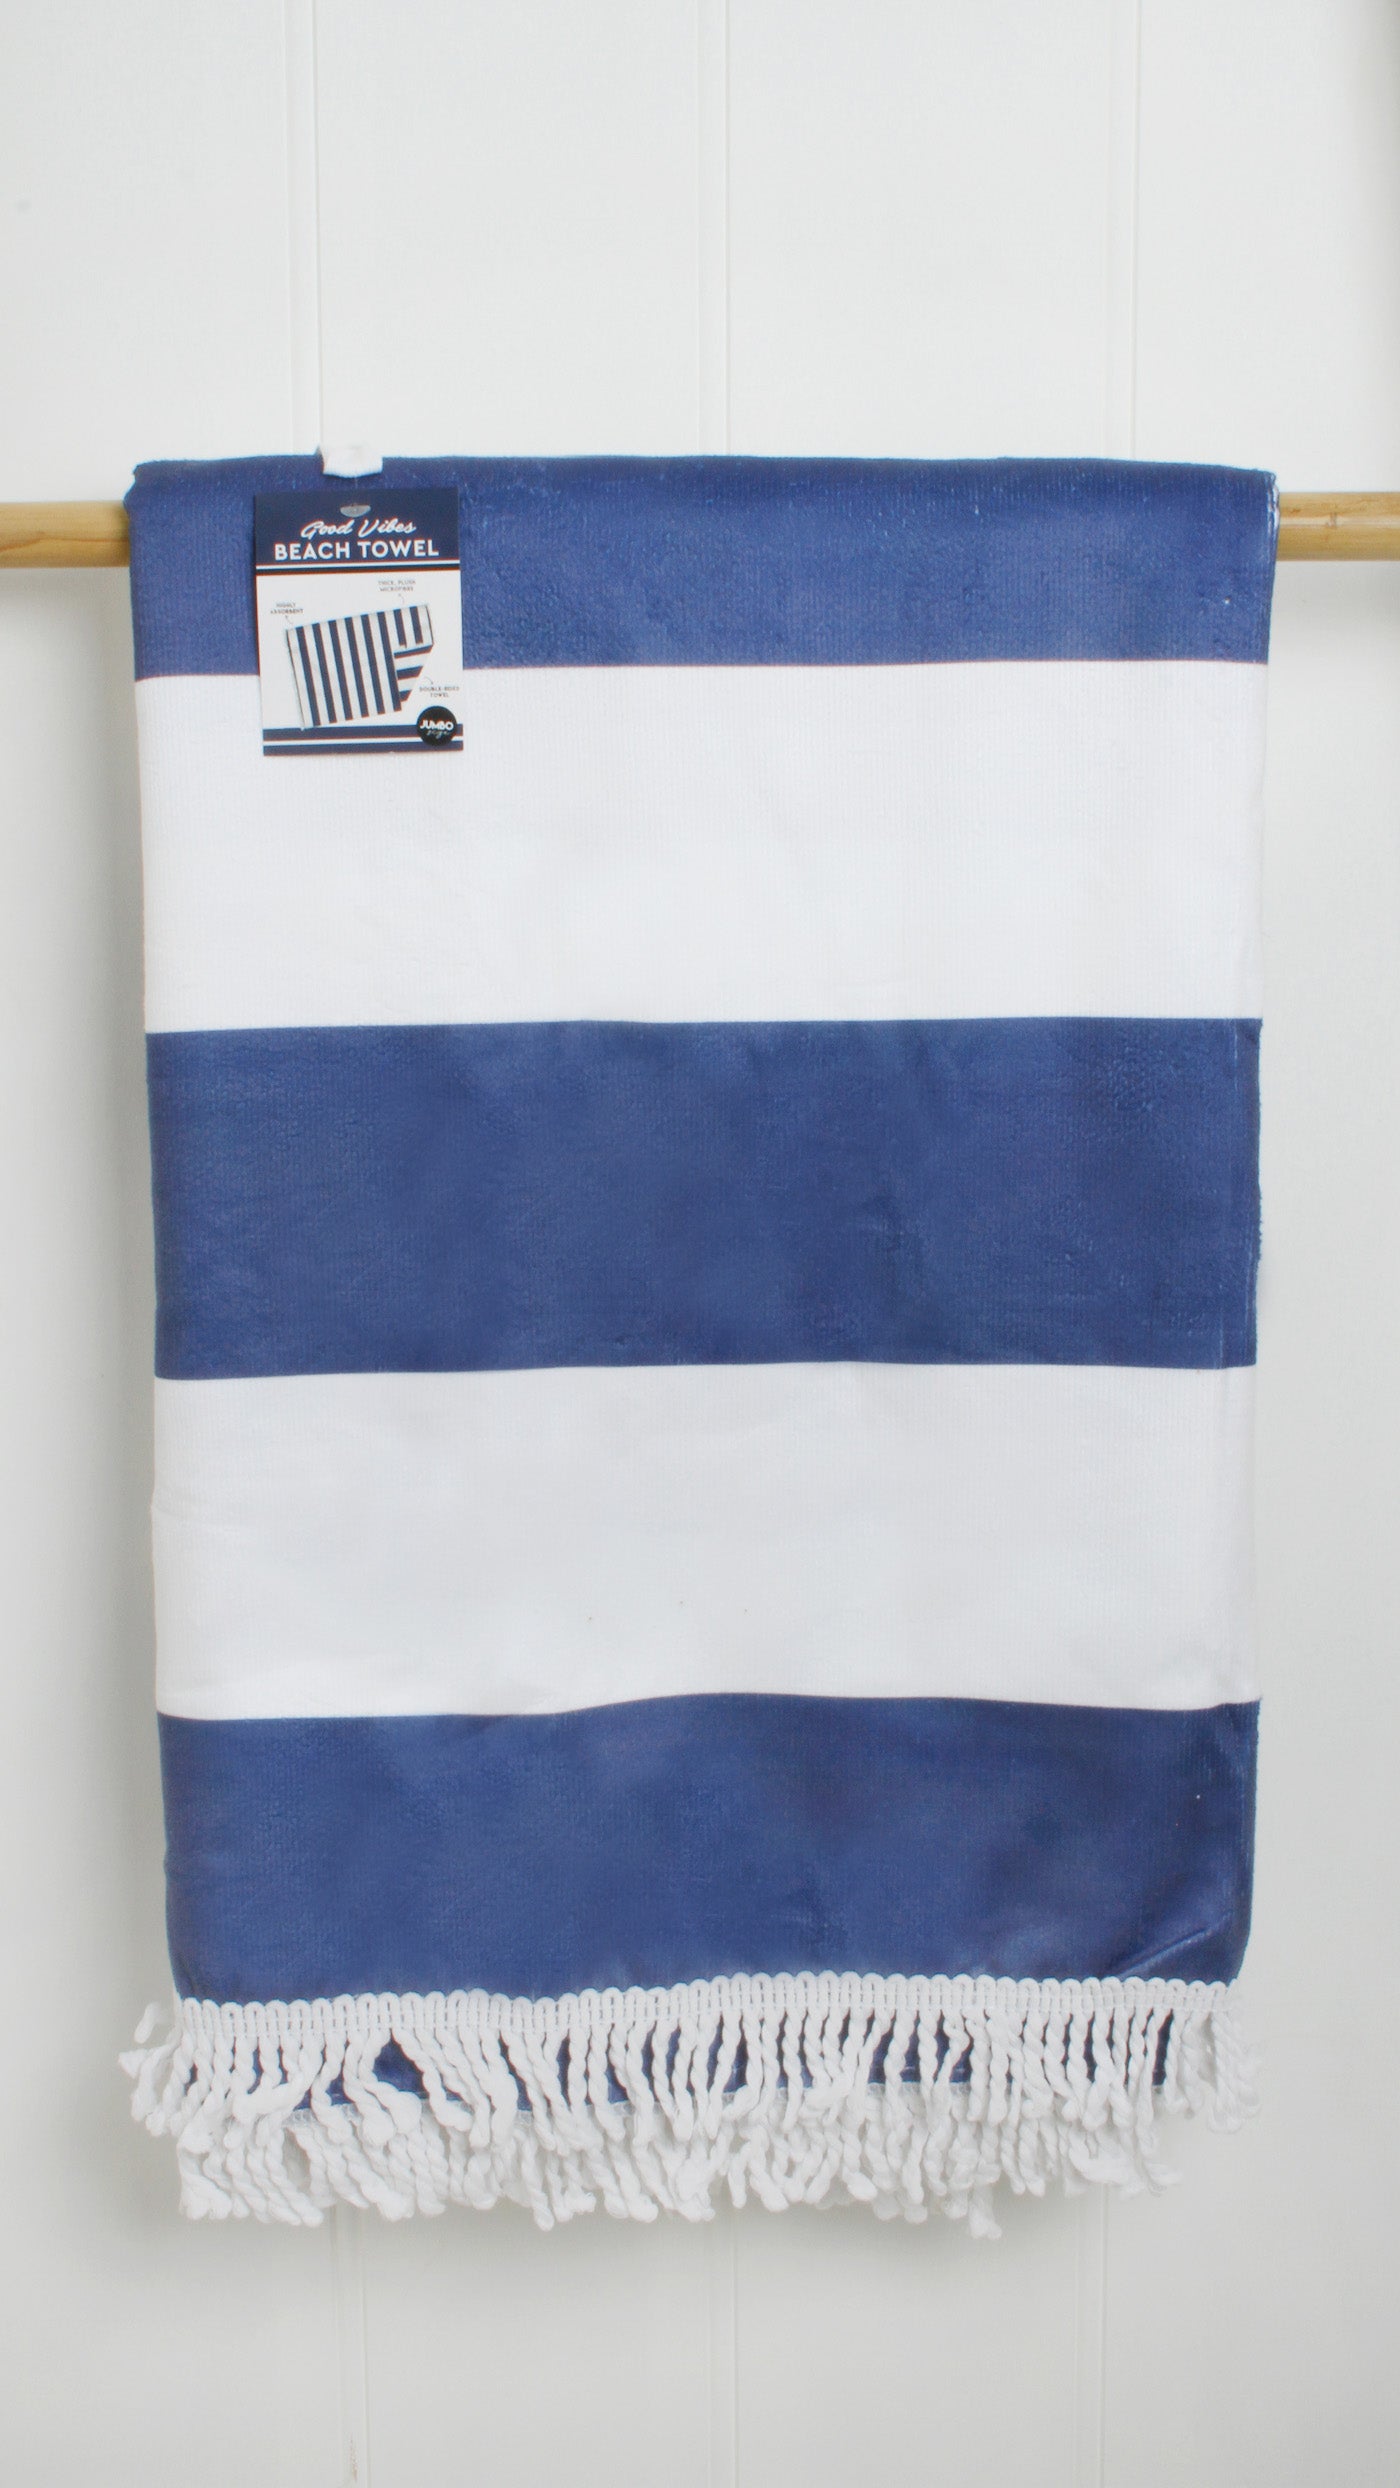 JUMBO BEACH TOWEL 180 X 150CM - NAVY BLUE & WHITE STRIPE